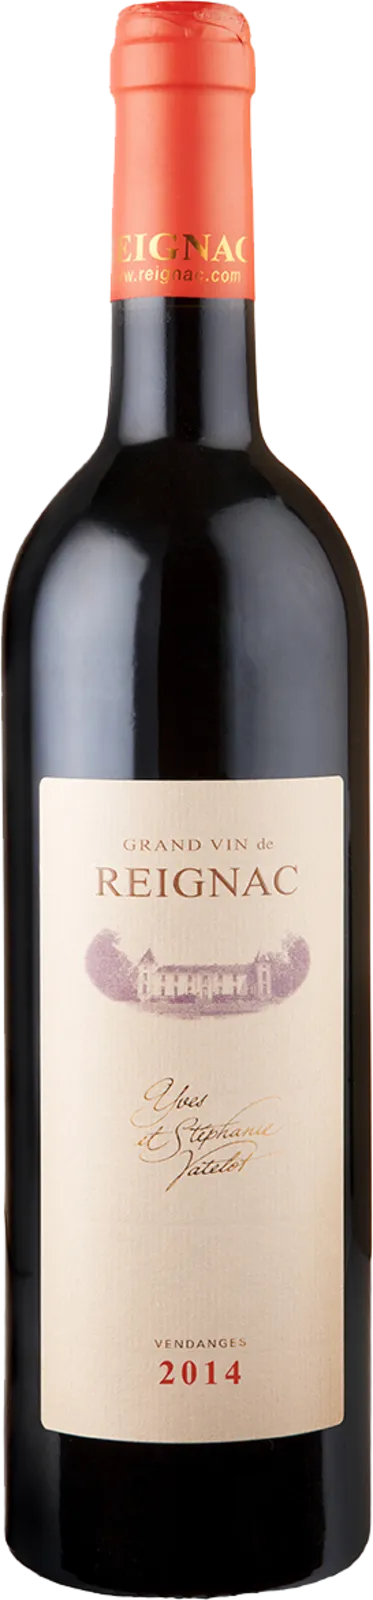 6 x Grand Vin de REIGNAC 2014